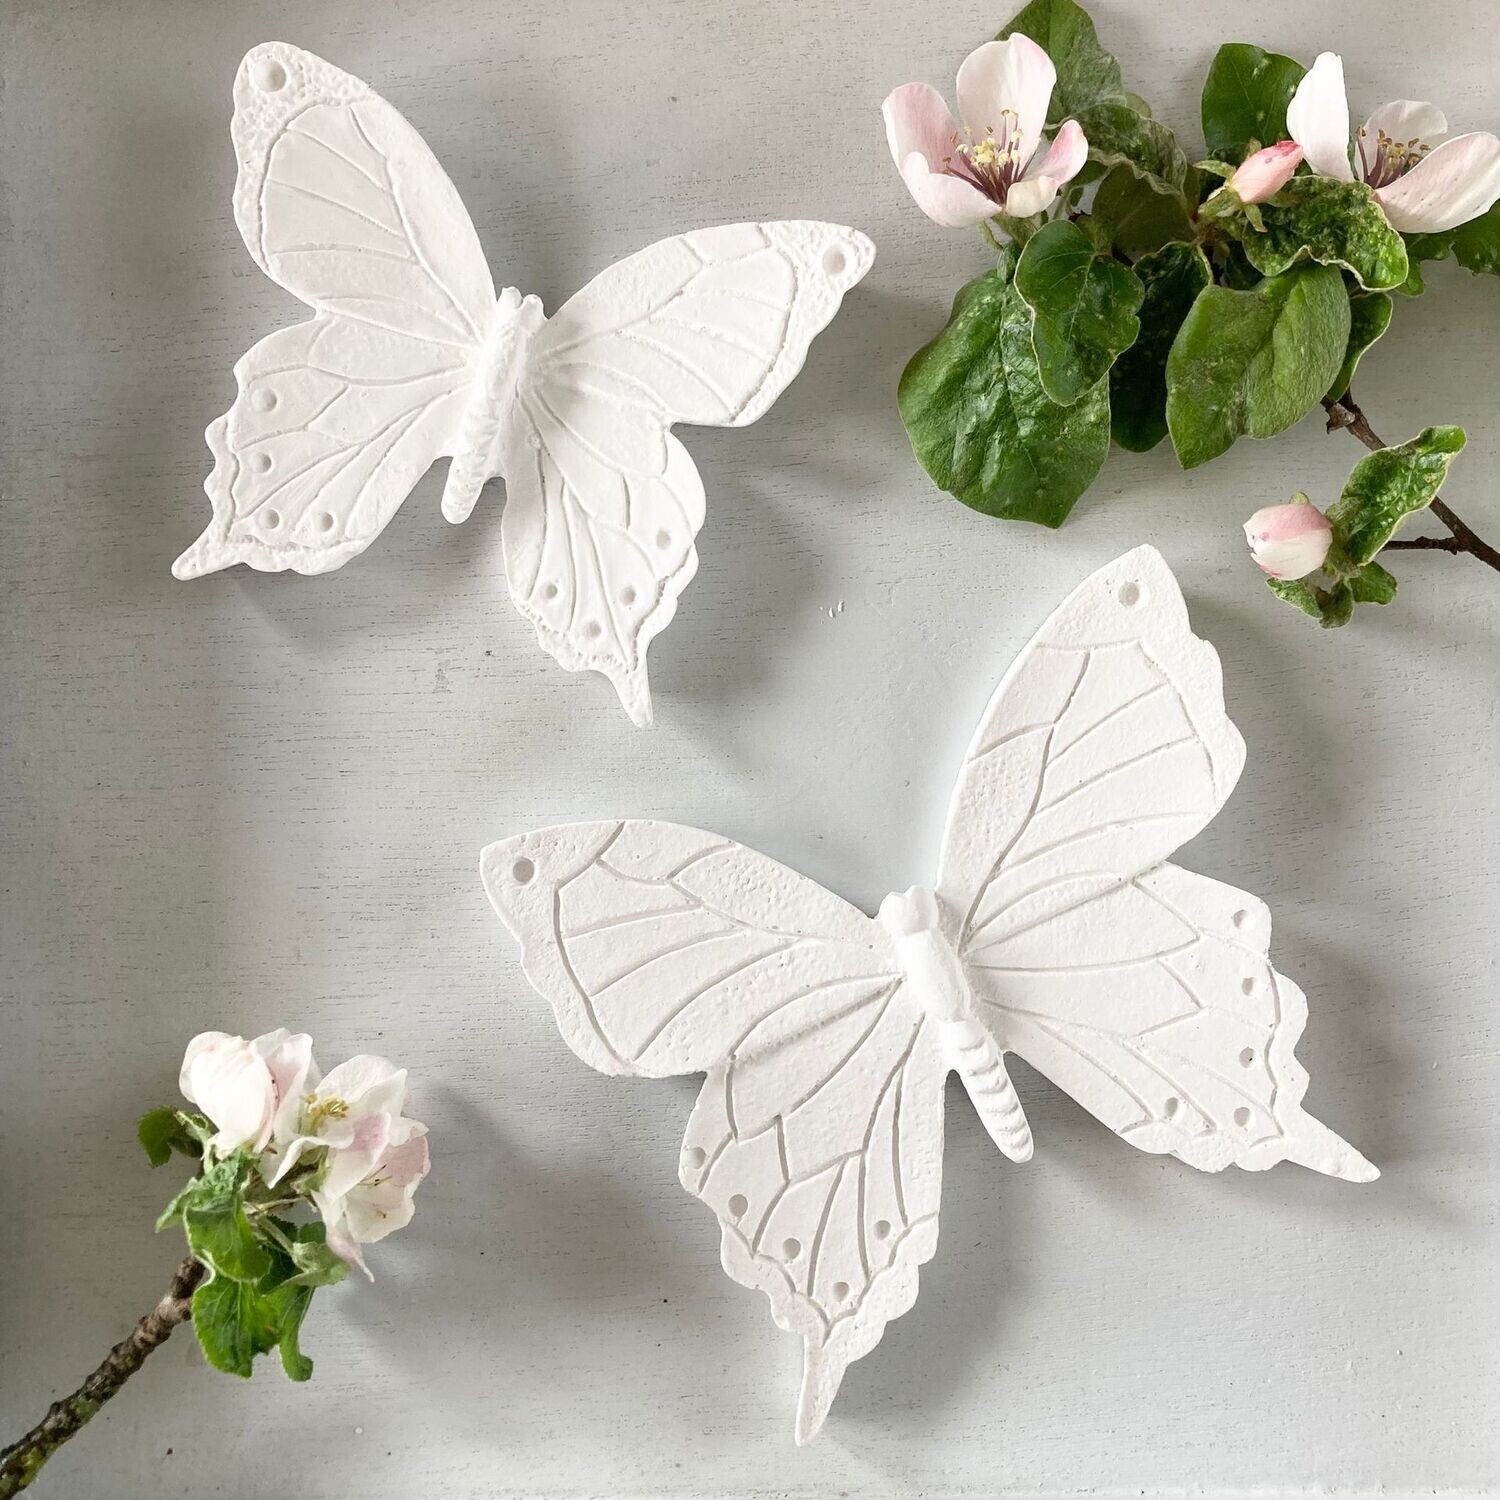 Silikon - Gießform - Schmetterling in 3 Größen, Schmetterling in 3 Größen: 1256 Schmetterling klein H/B: 10 x 11 cm